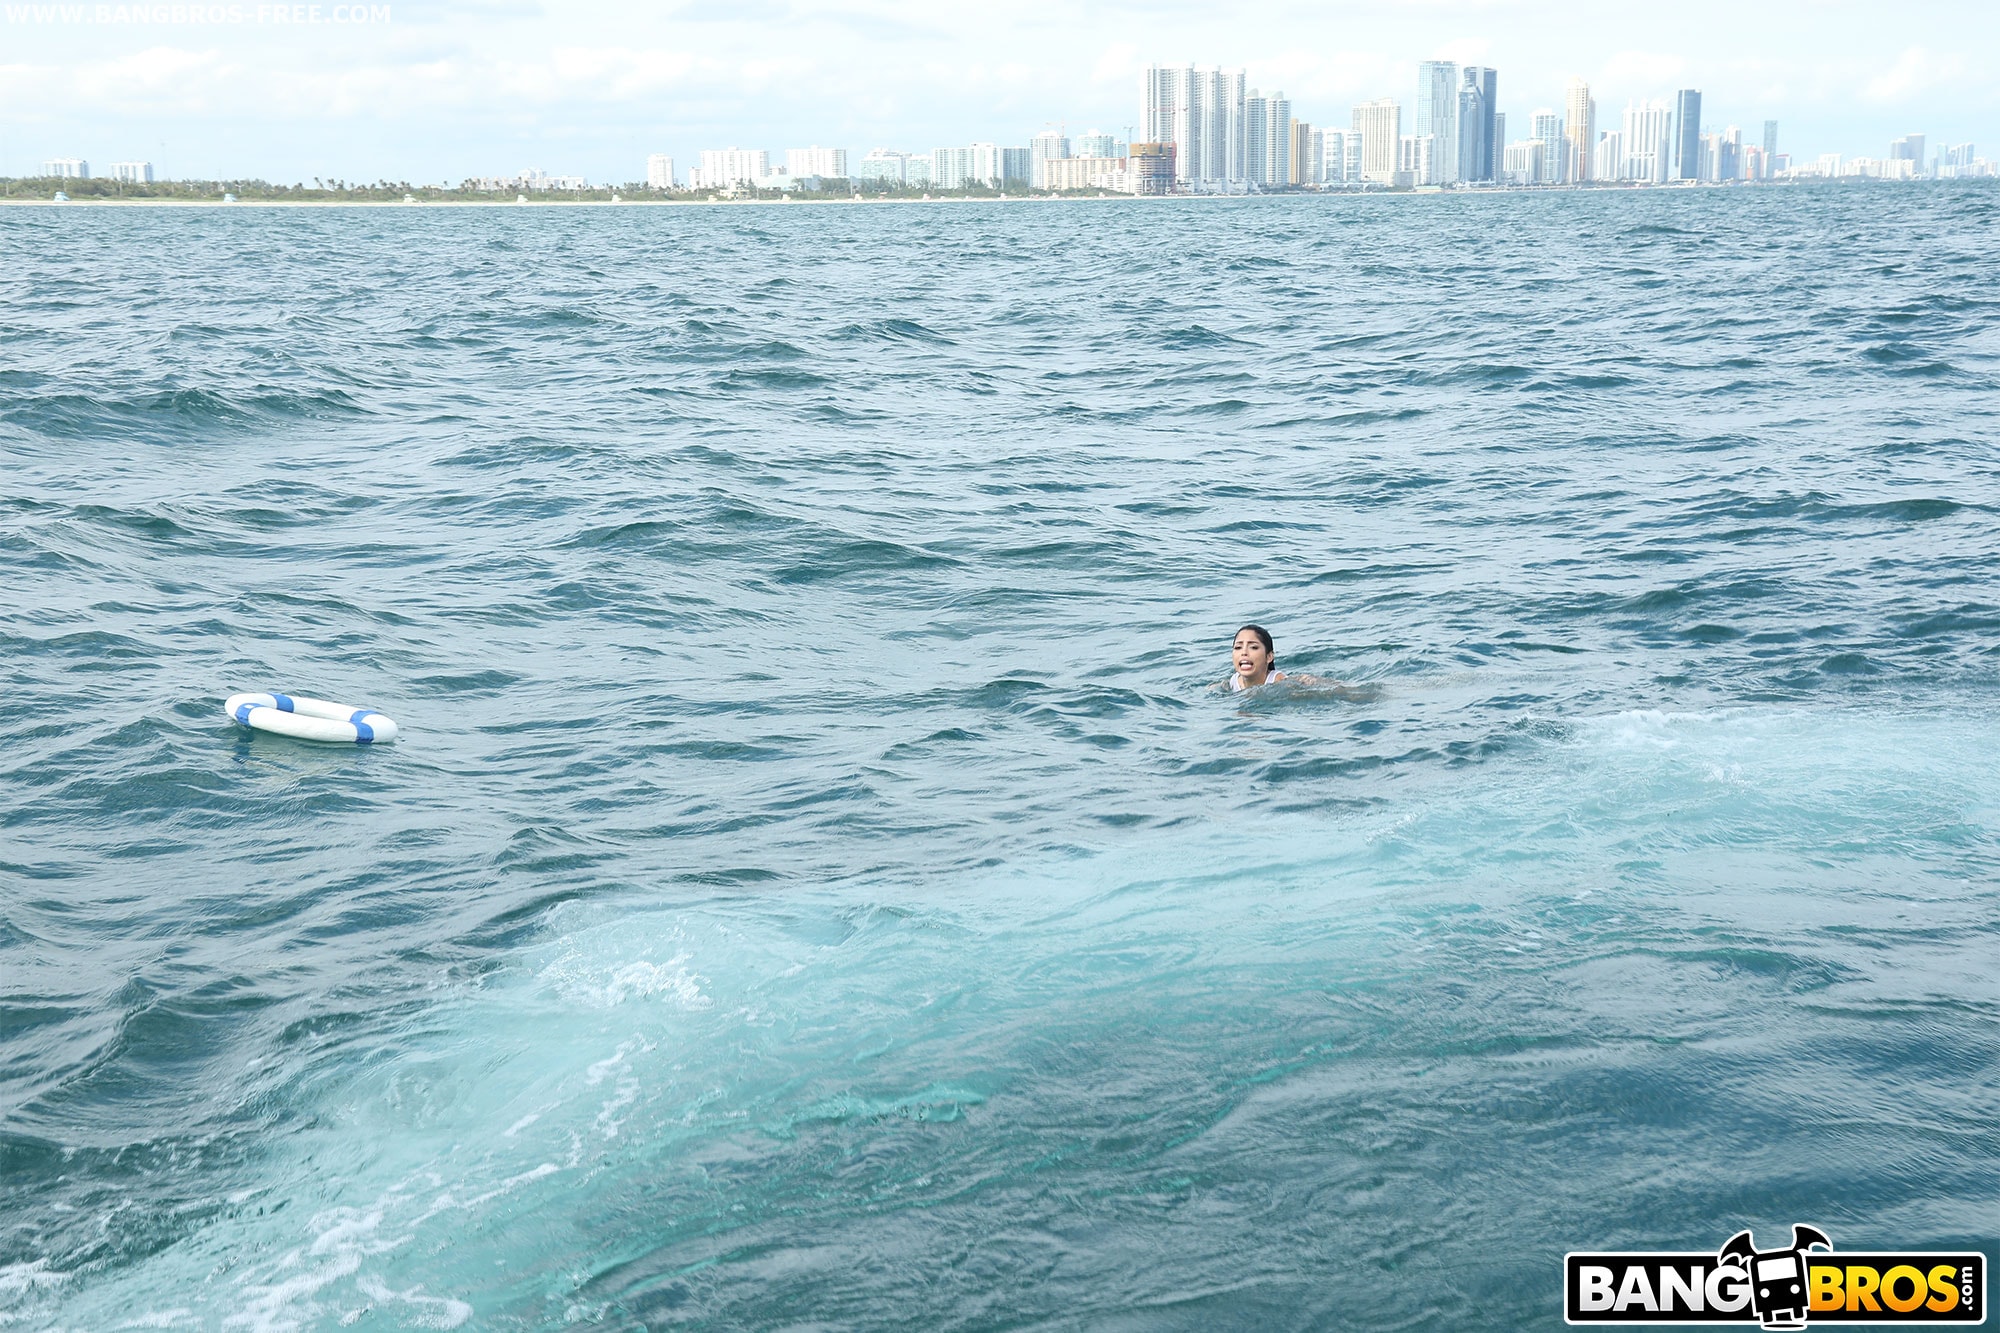 Bangbros 'Cuban Hottie Gets Rescued at Sea' starring Vanessa Sky (Photo 240)